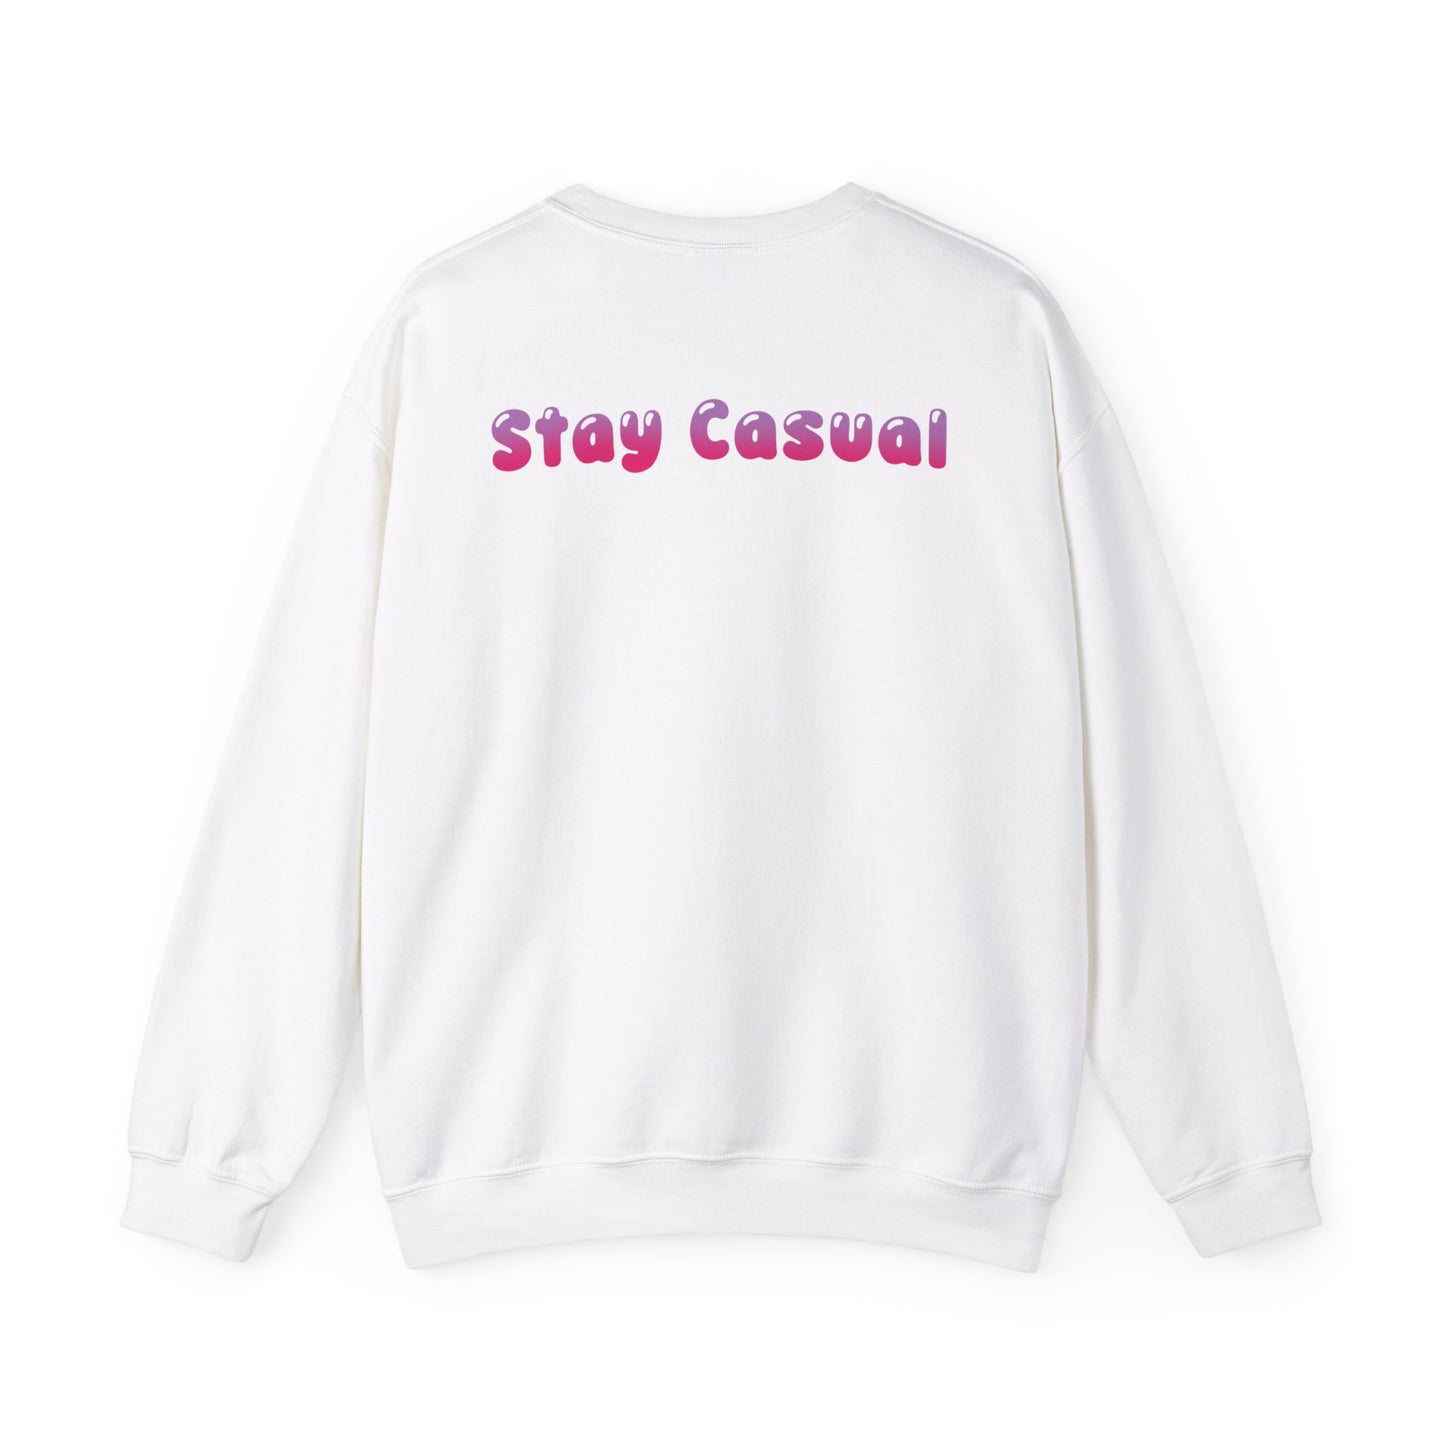 stay casual sweatshirt